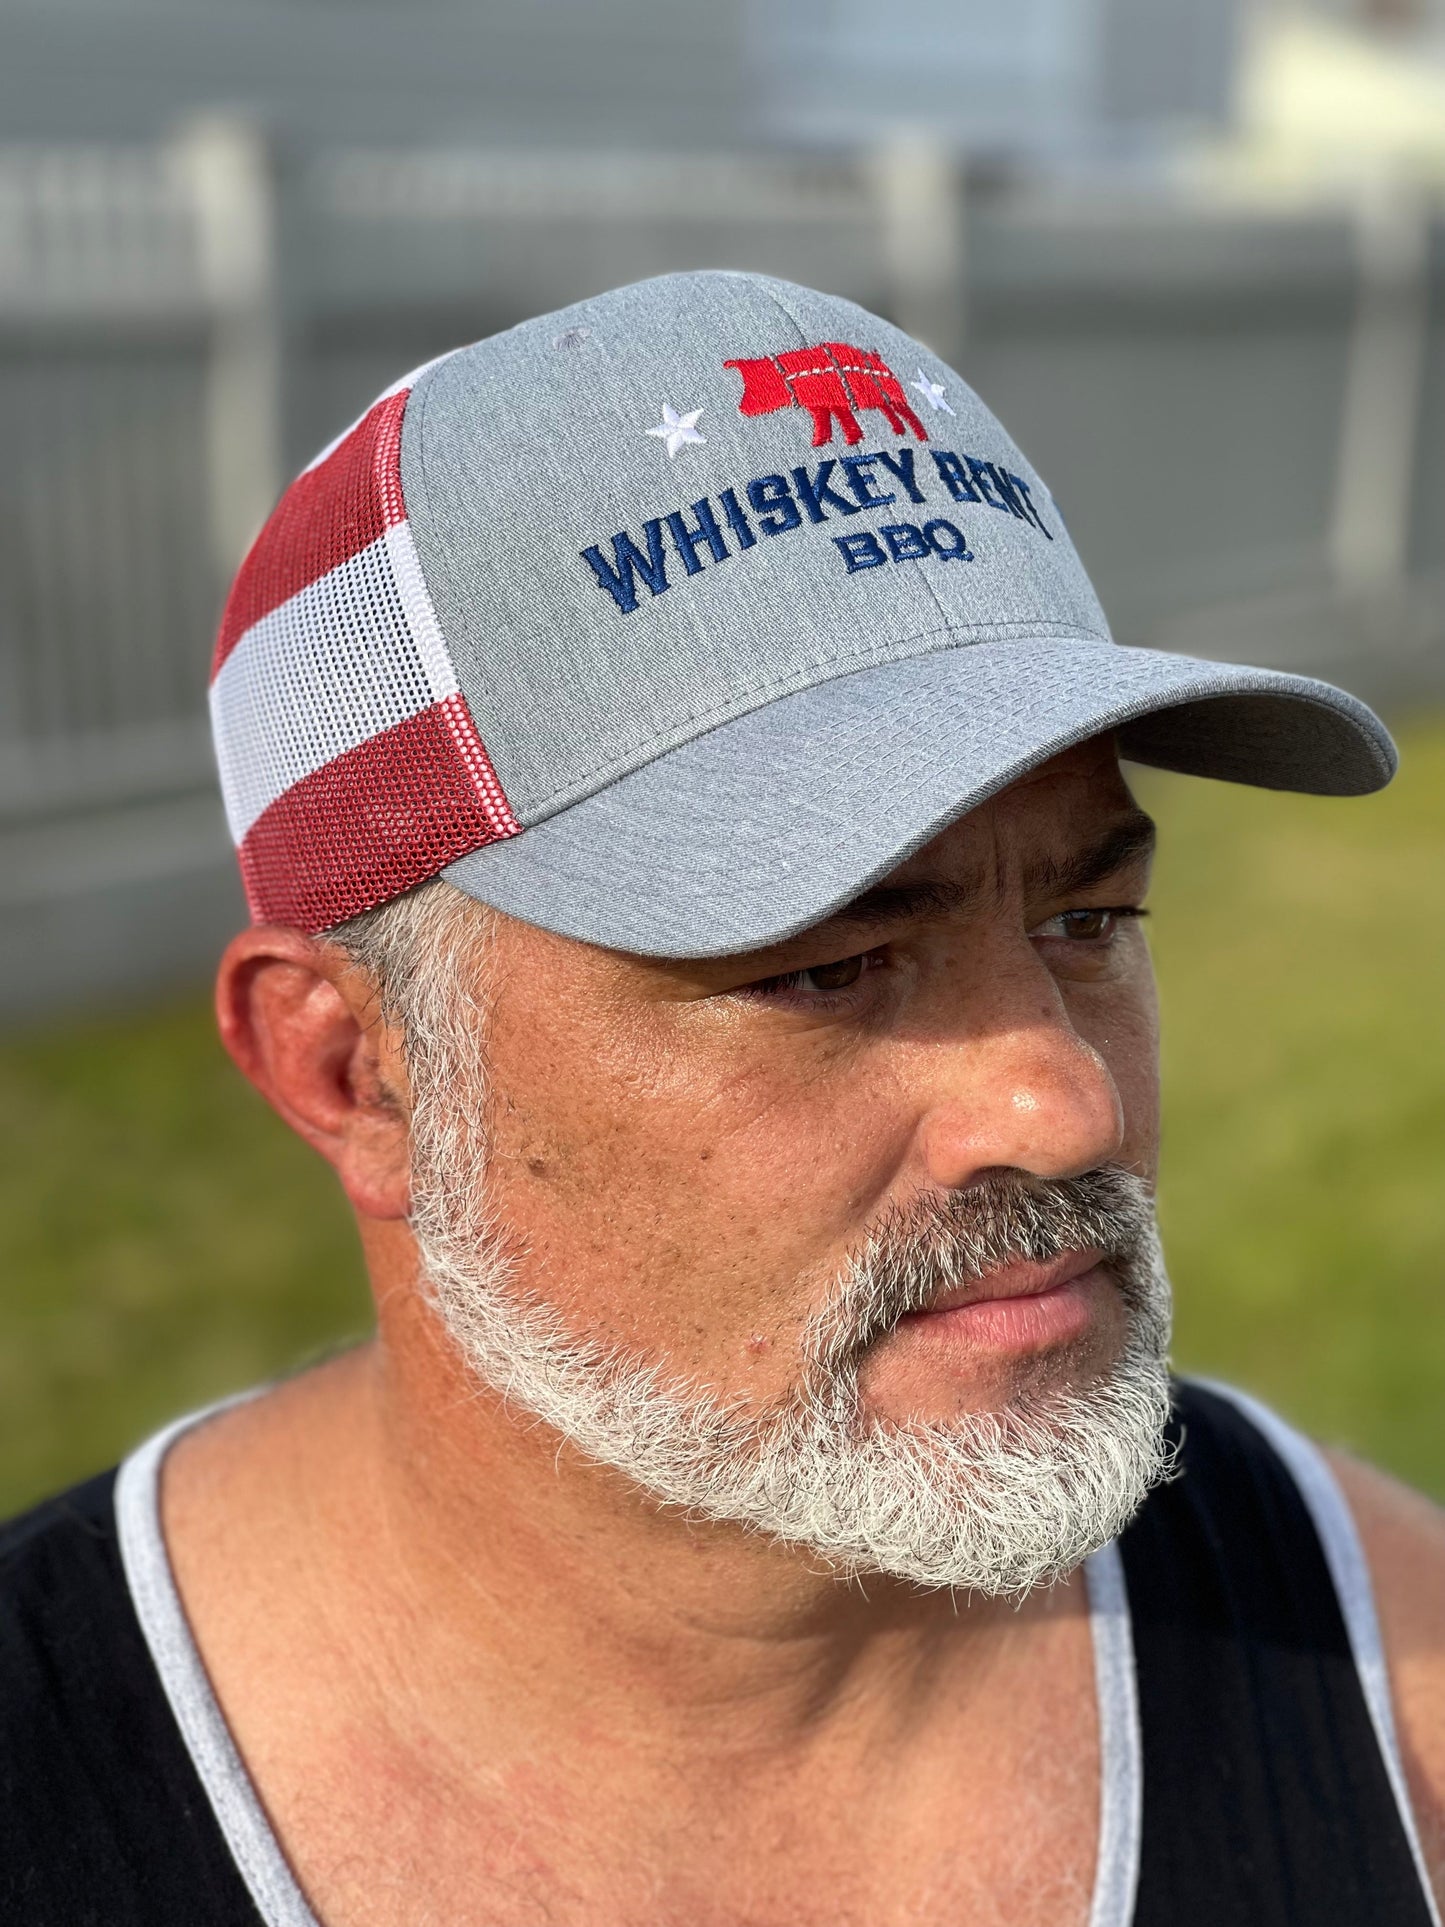 American Flag Whiskey Bent BBQ hat